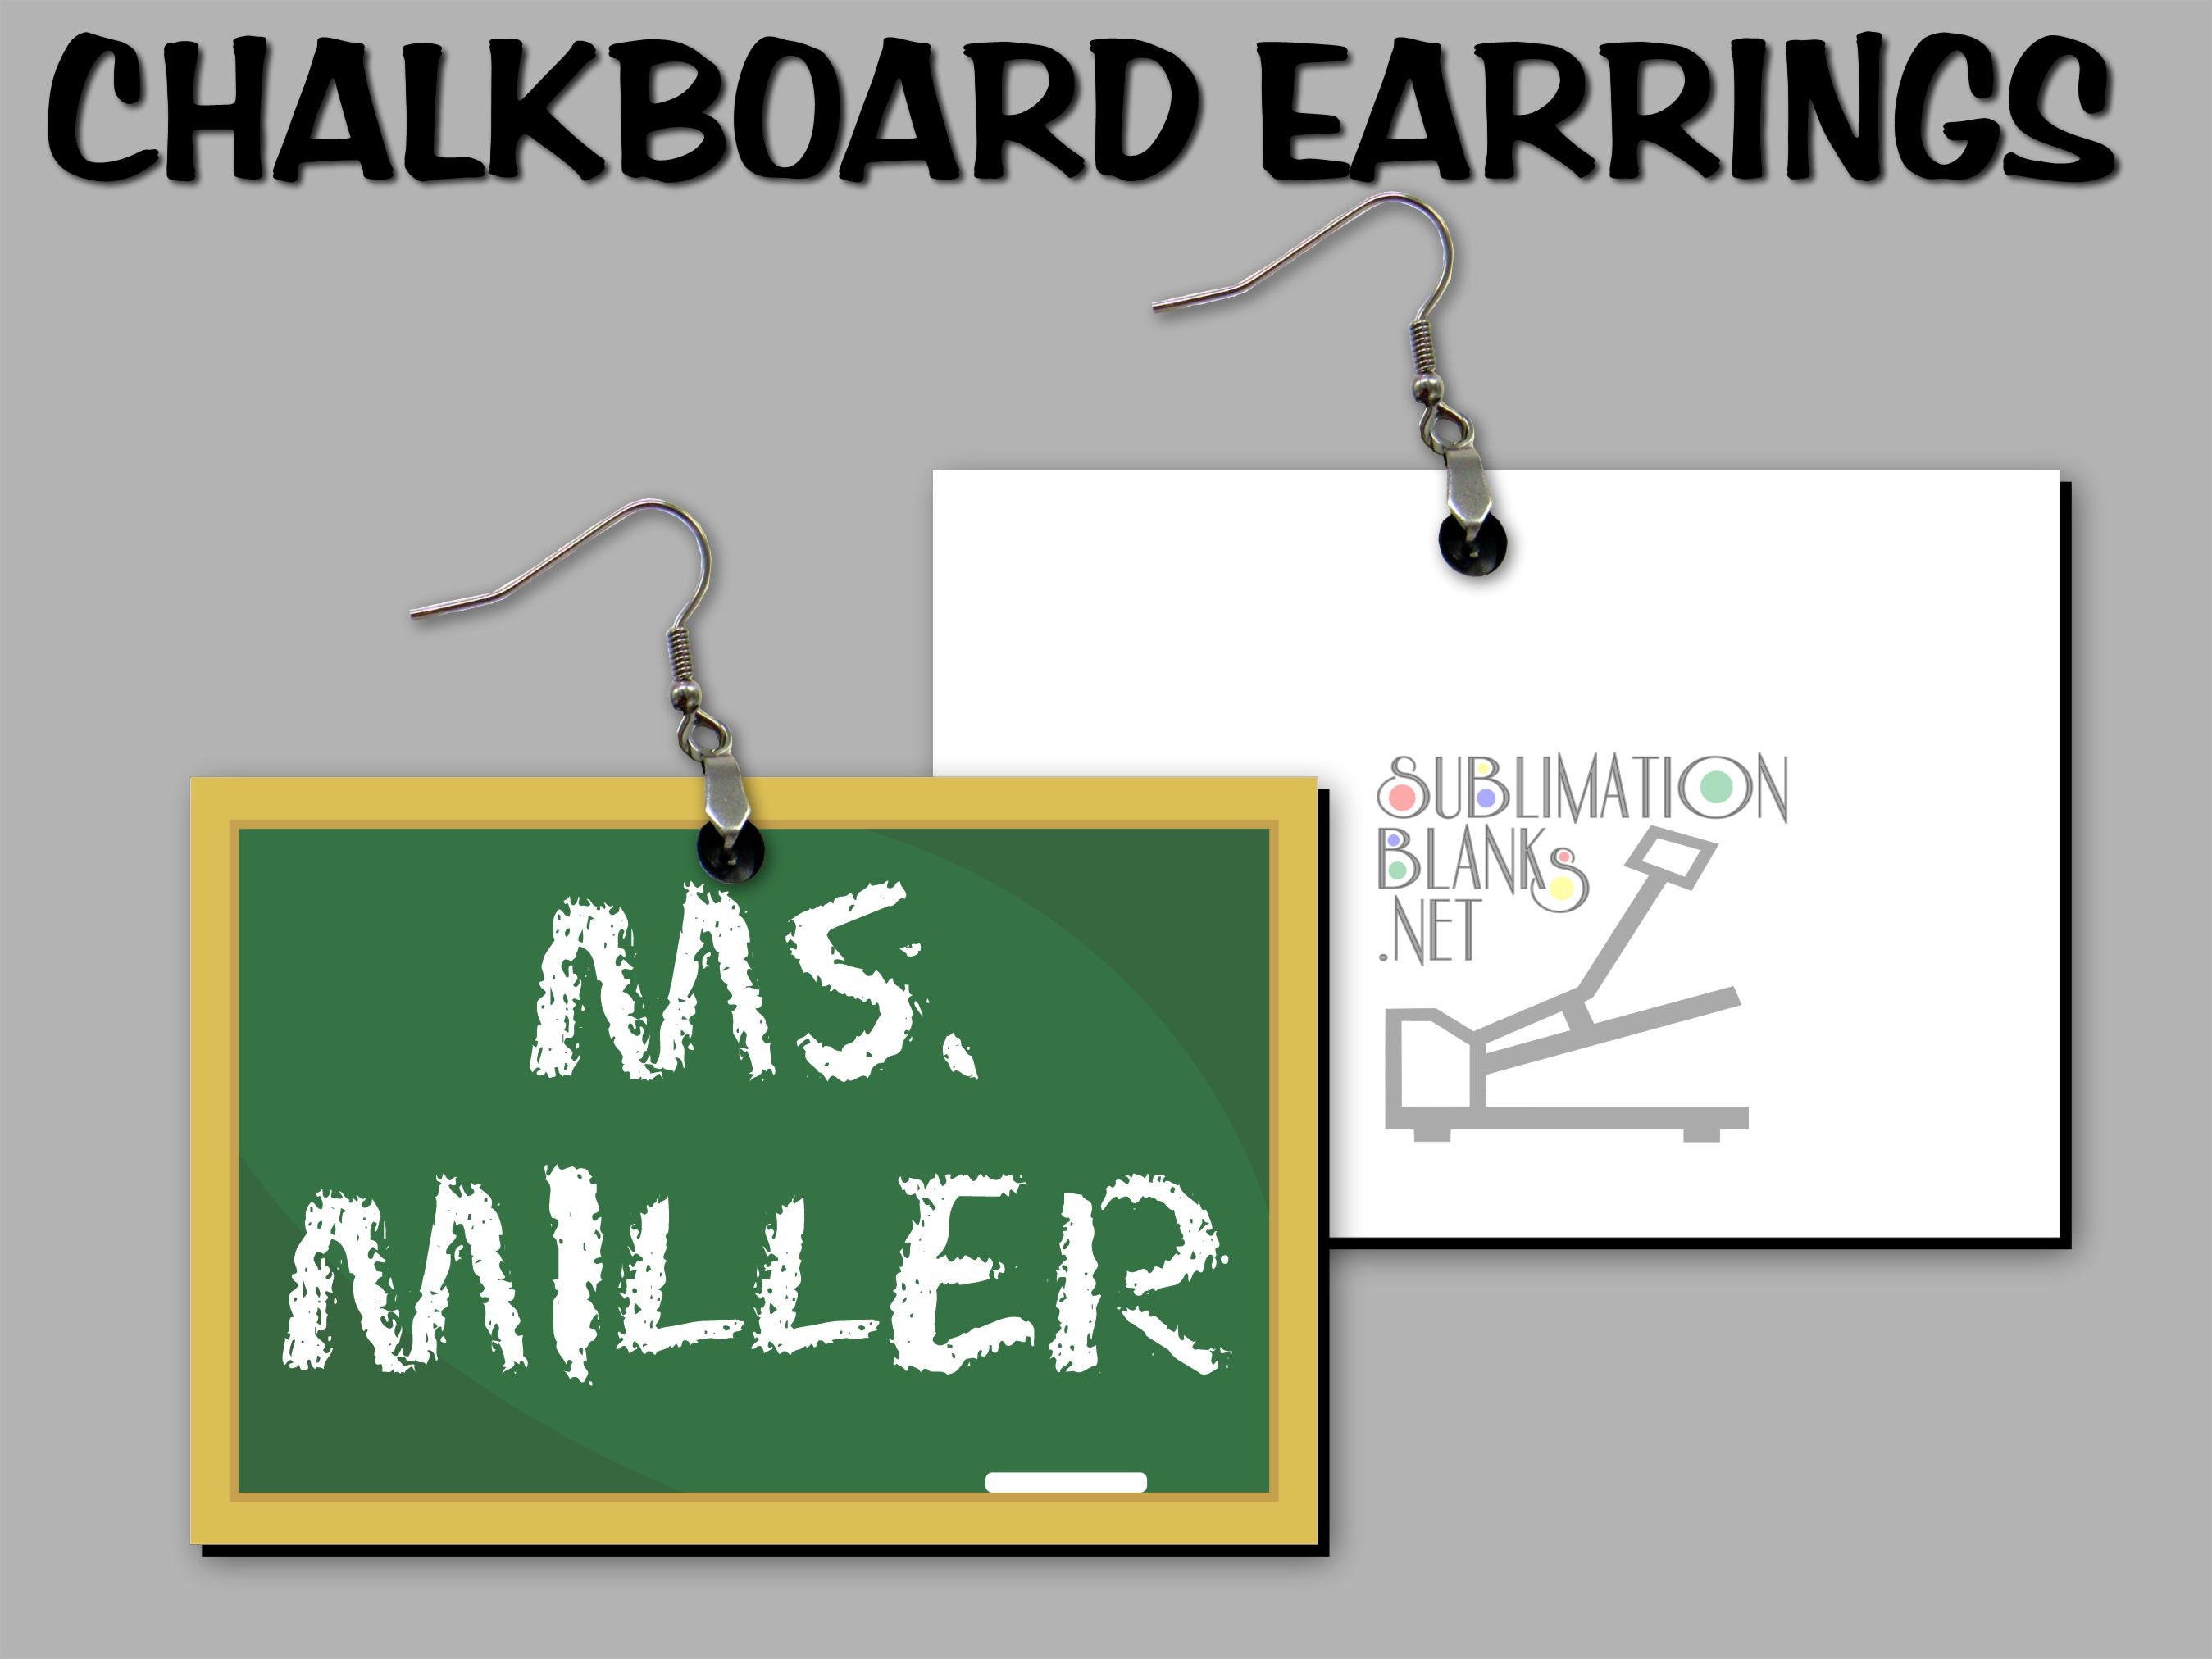 CHALKBOARD Earrings Teacher Sublimation Blanks Sublimation Earrings  Wholesale Prices Multiple Sizes Single Sided Earring Blanks School Diy 